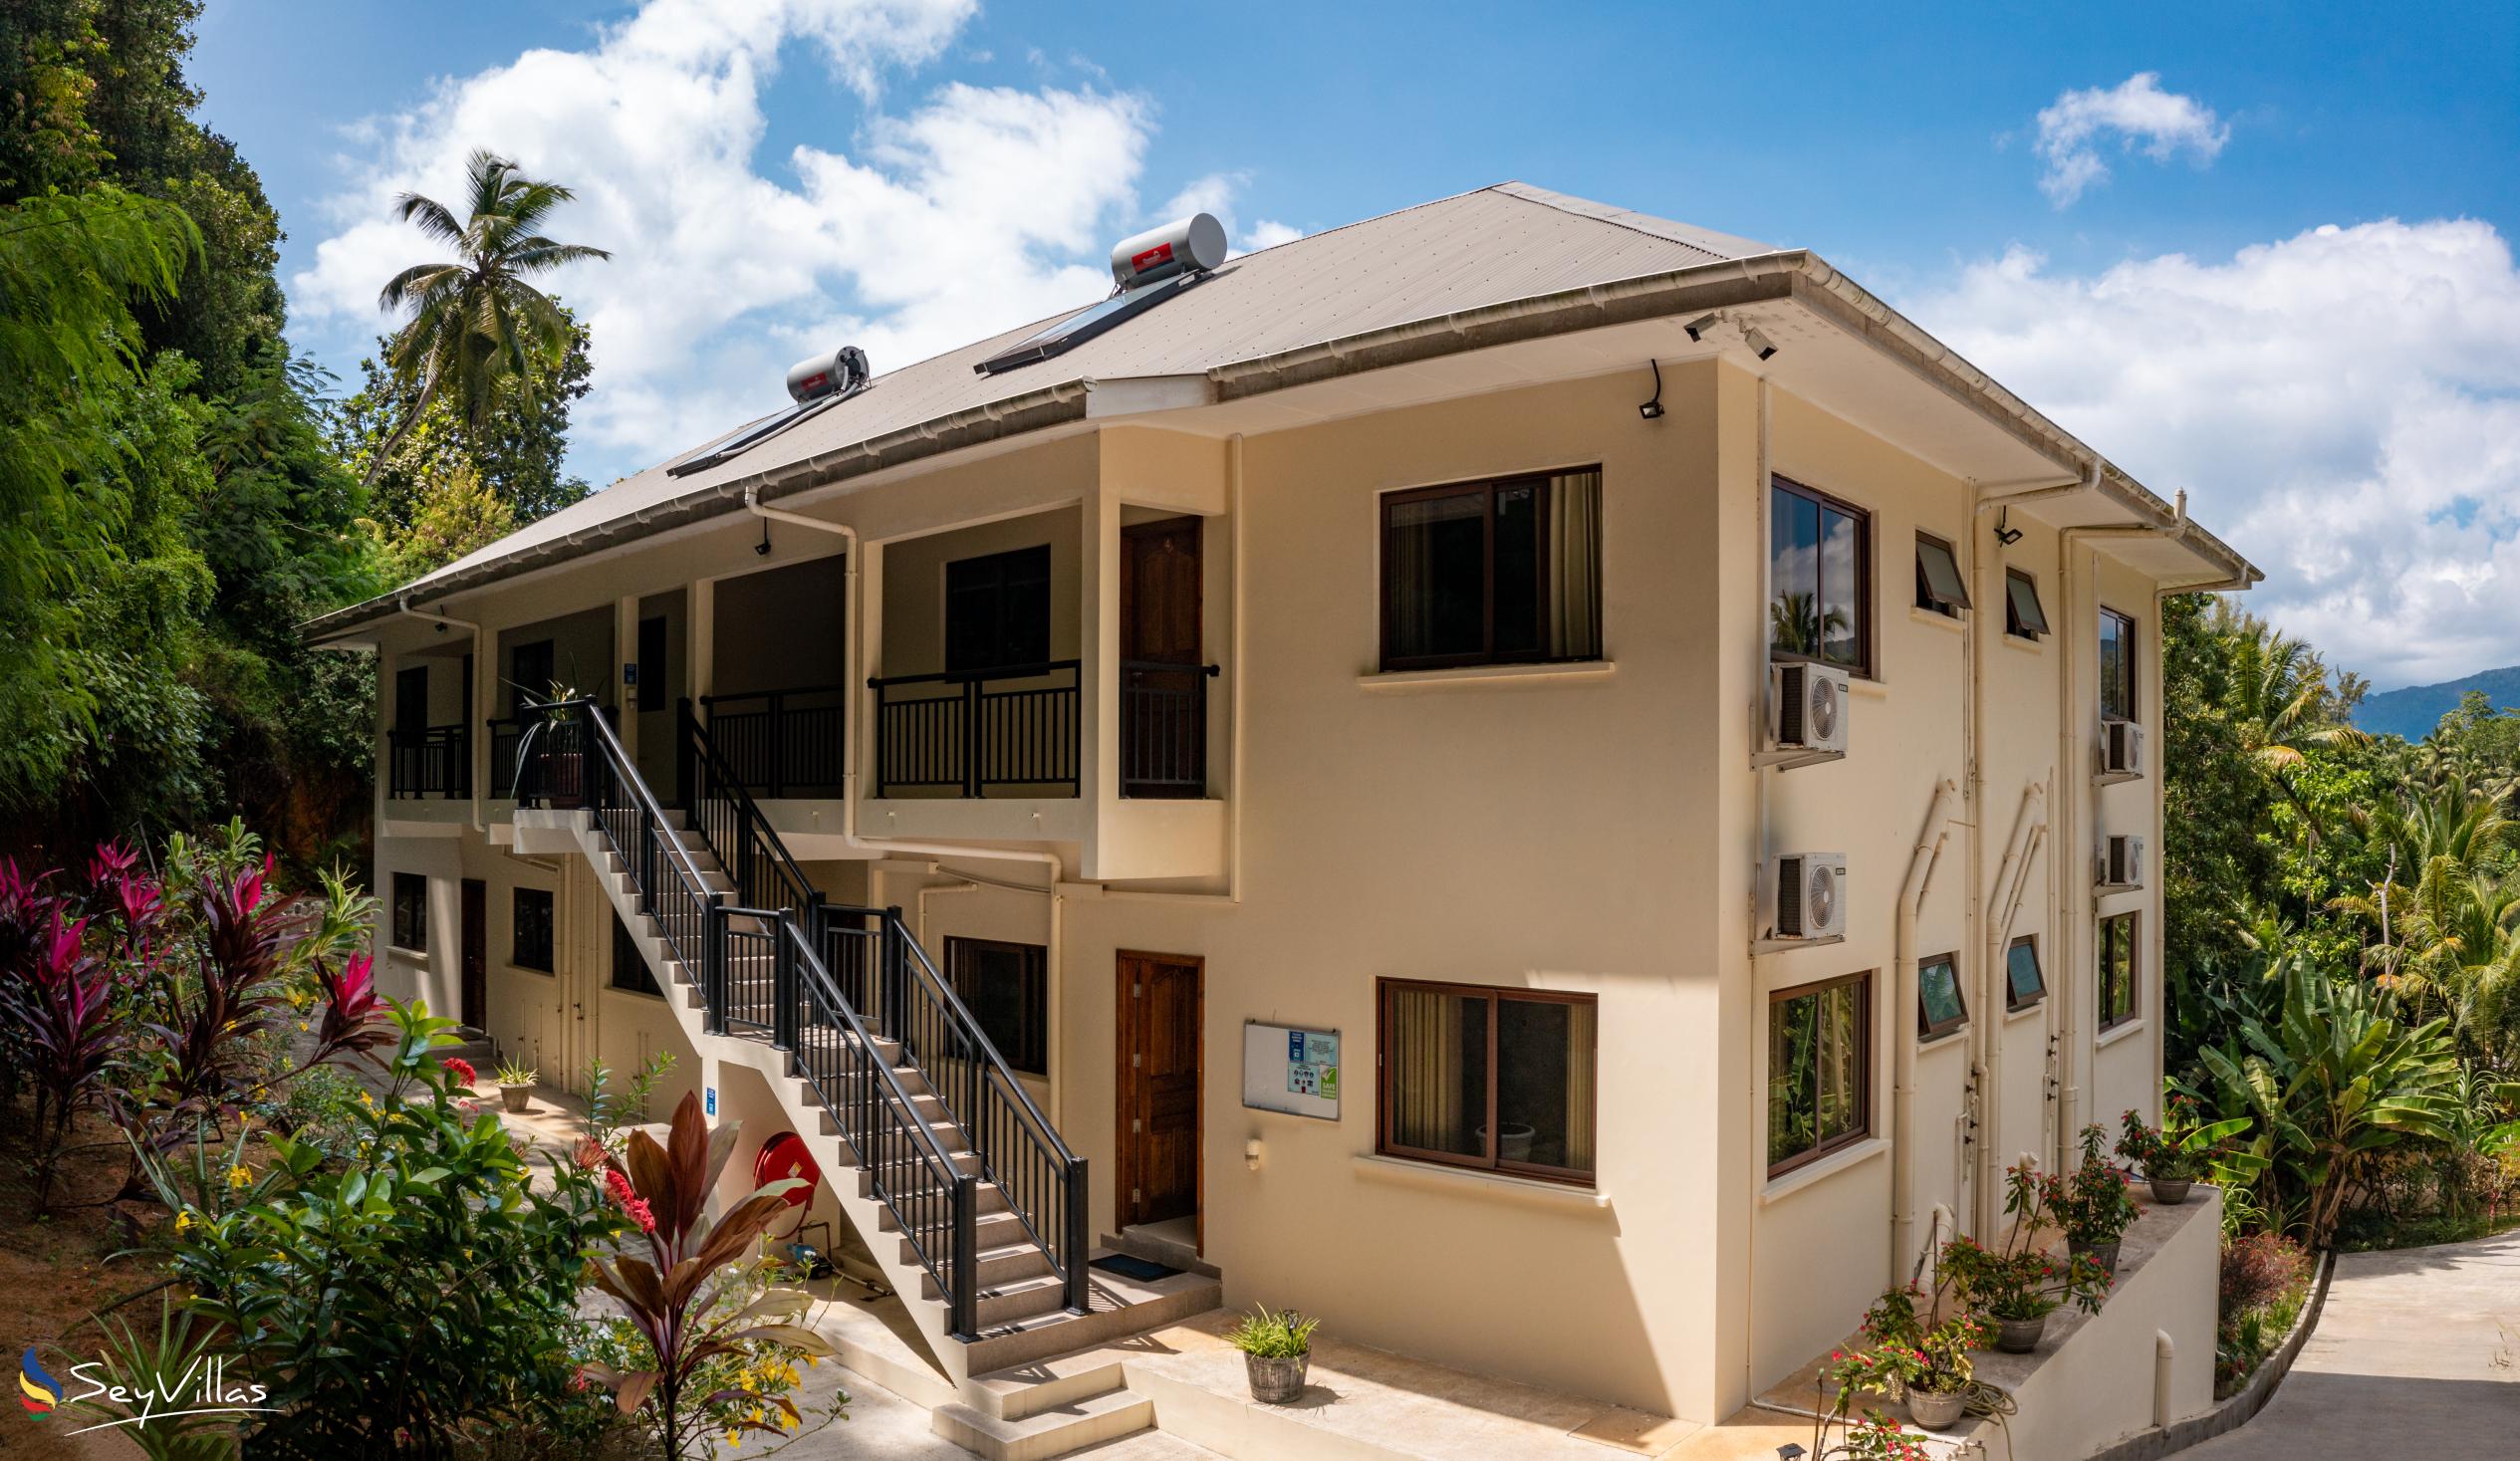 Photo 1: Kanasuk Self Catering Apartments - Outdoor area - Mahé (Seychelles)